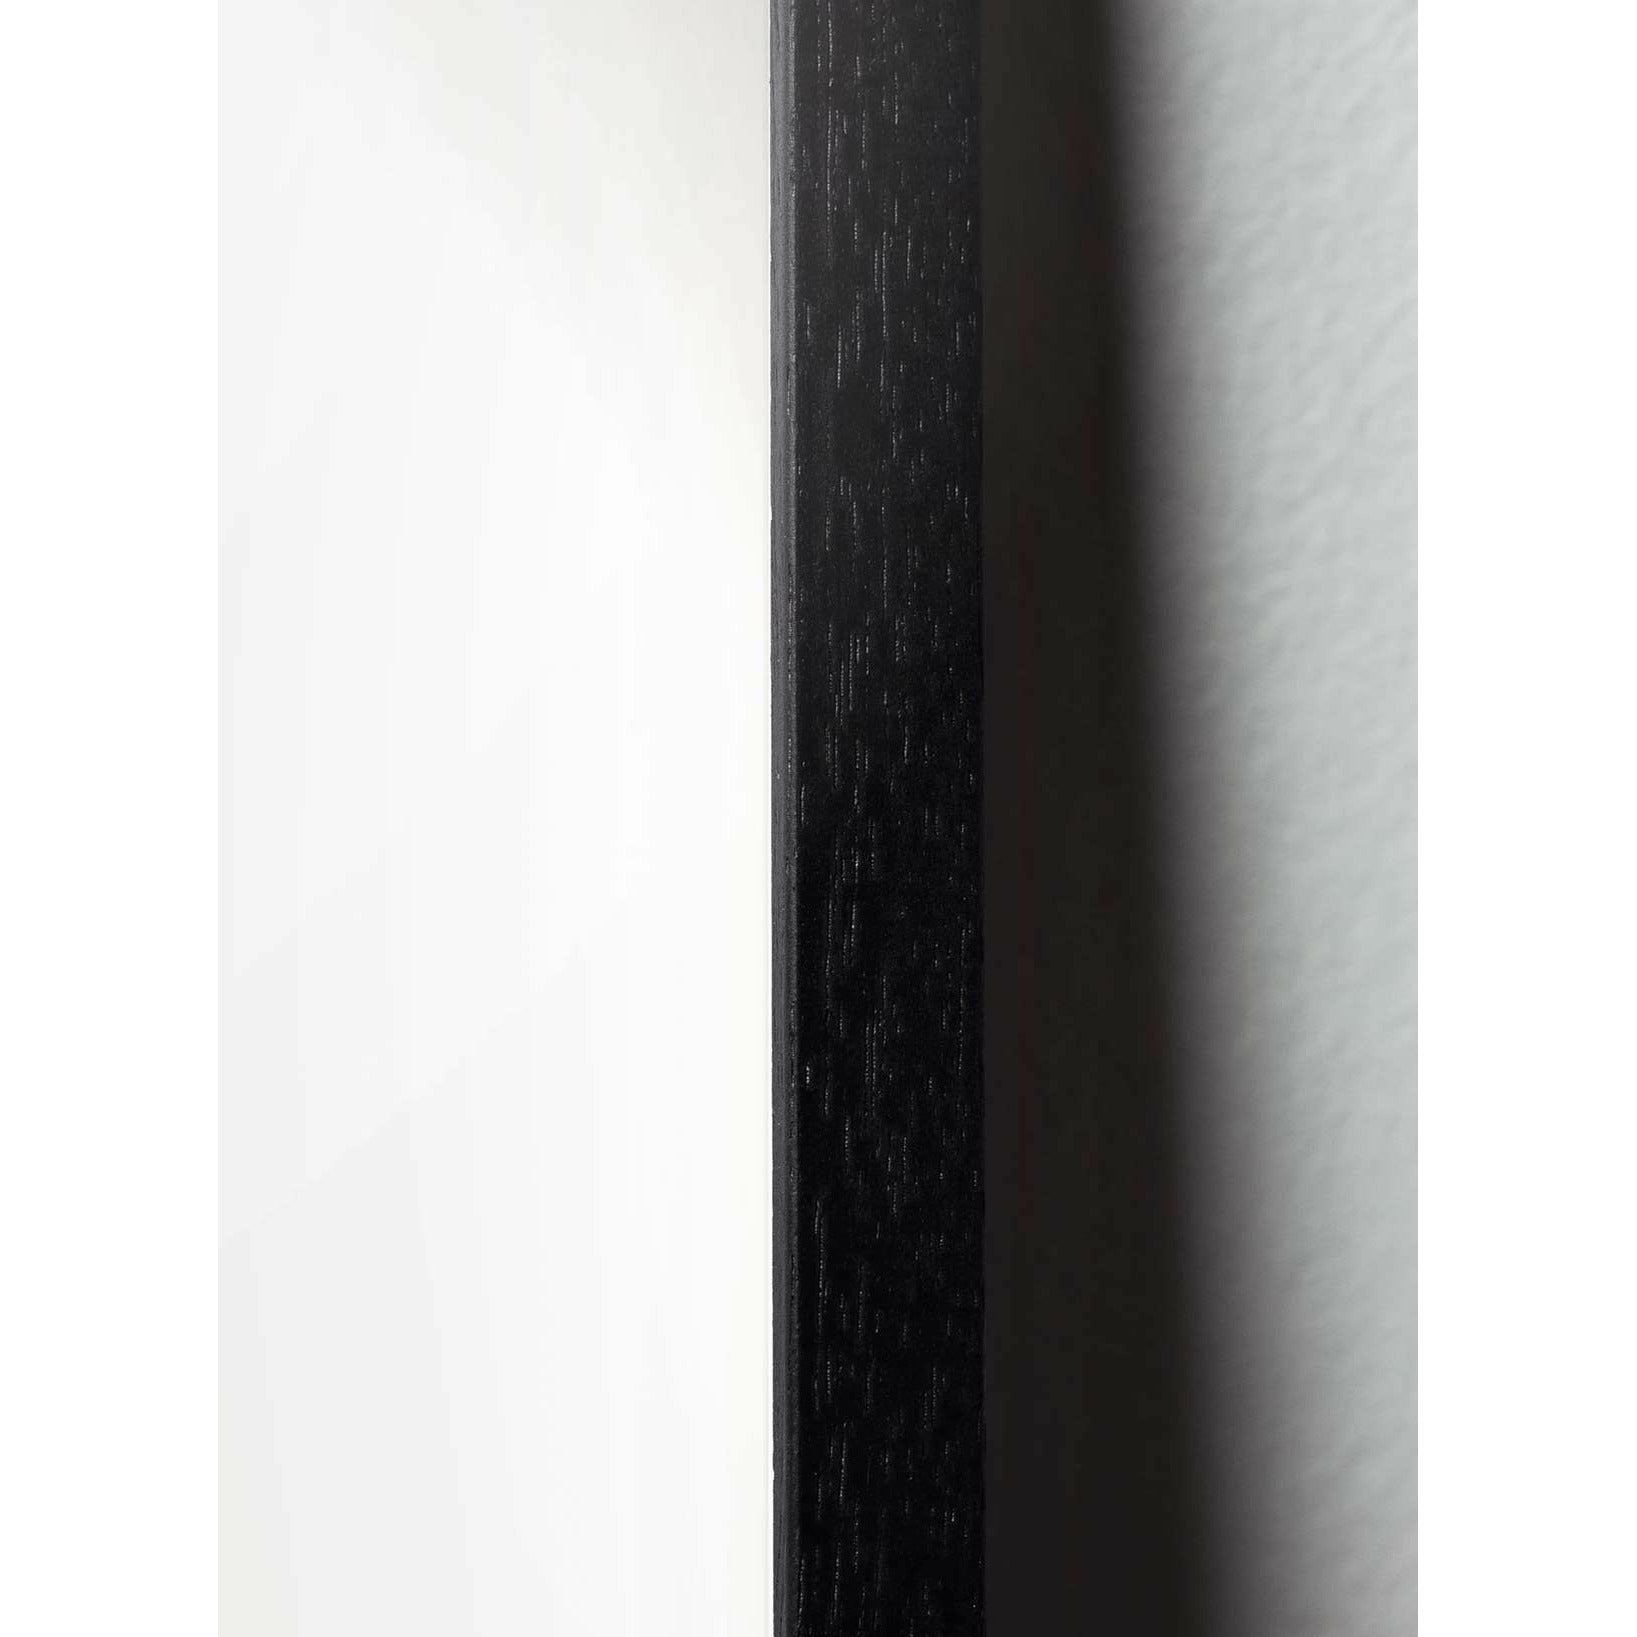 Brainchild Ontwerppictogram Poster, frame in zwart gelakt hout A5, kleur